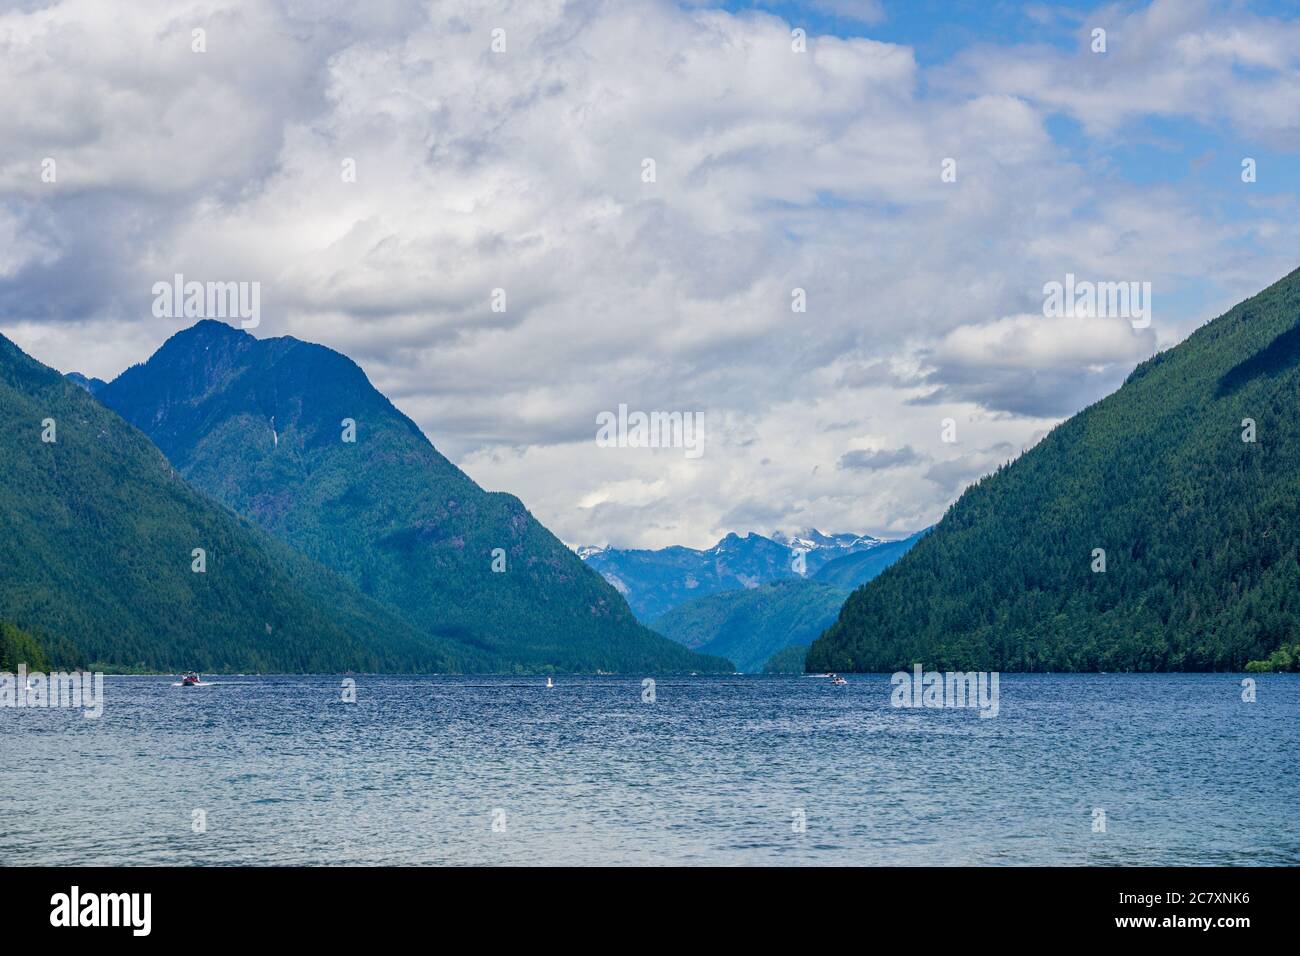 lago de montaña azul con montañas verdes cielo azul y nubes blancas Foto de stock